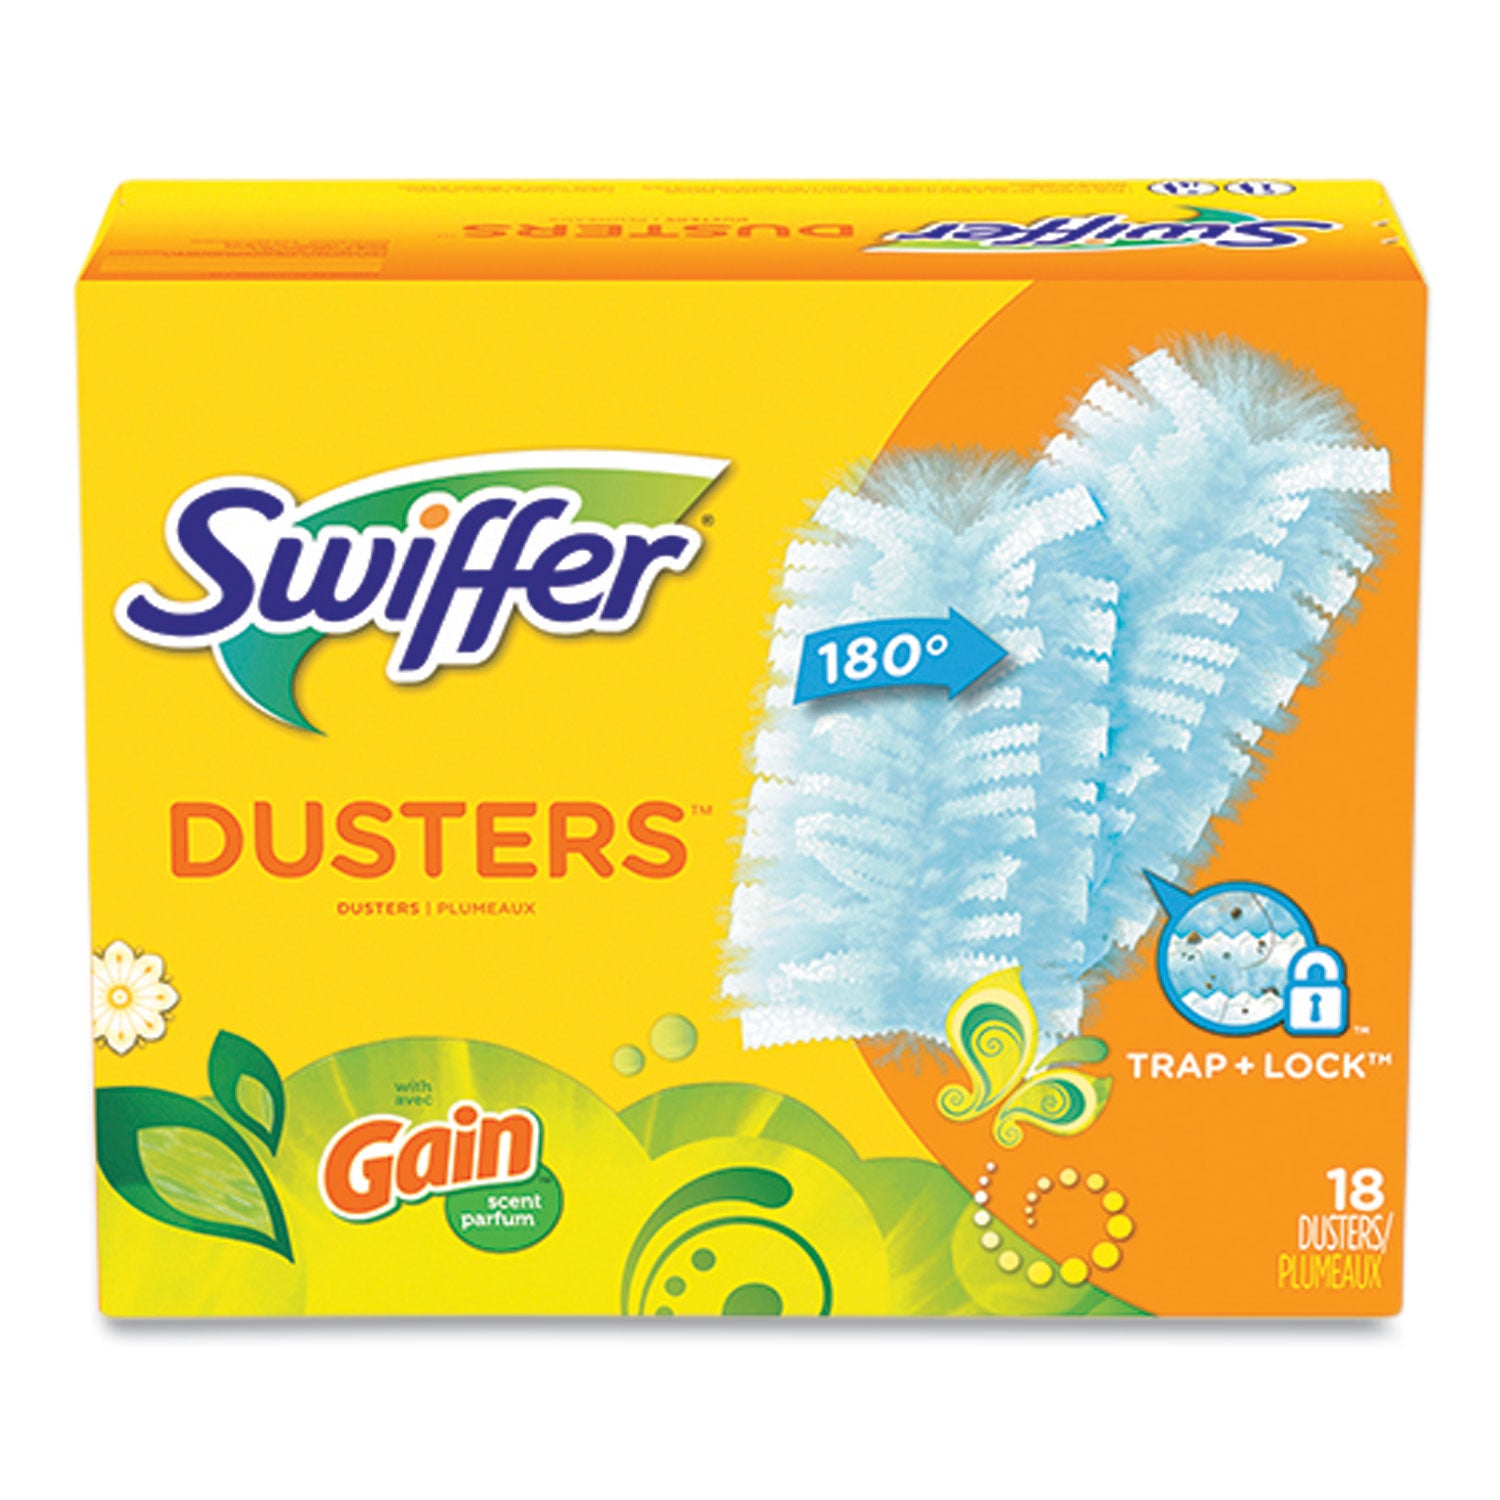 dusters-refill-dust-lock-fiber-blue-gain-original-scent-18-pack_pgc99058 - 2